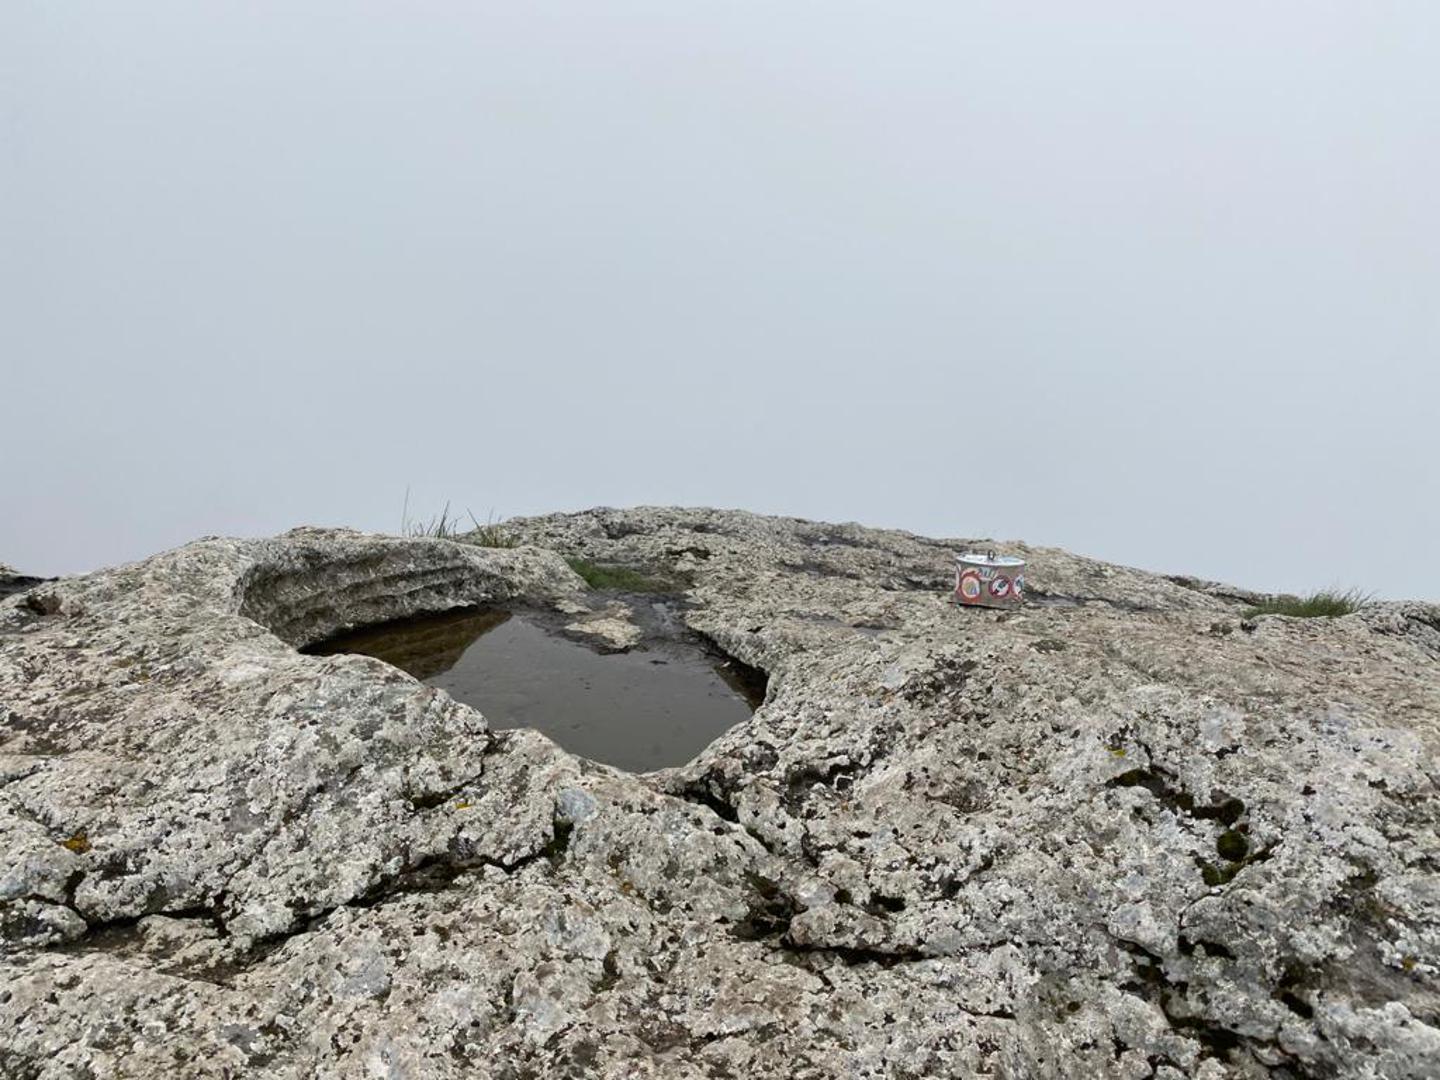 Vrh Zir kontrolna je točka Hrvatske planinarske obilaznice i kontrolna točka obilaznice Lički gorski biseri. Sam vrh označen je manjim šiljkom